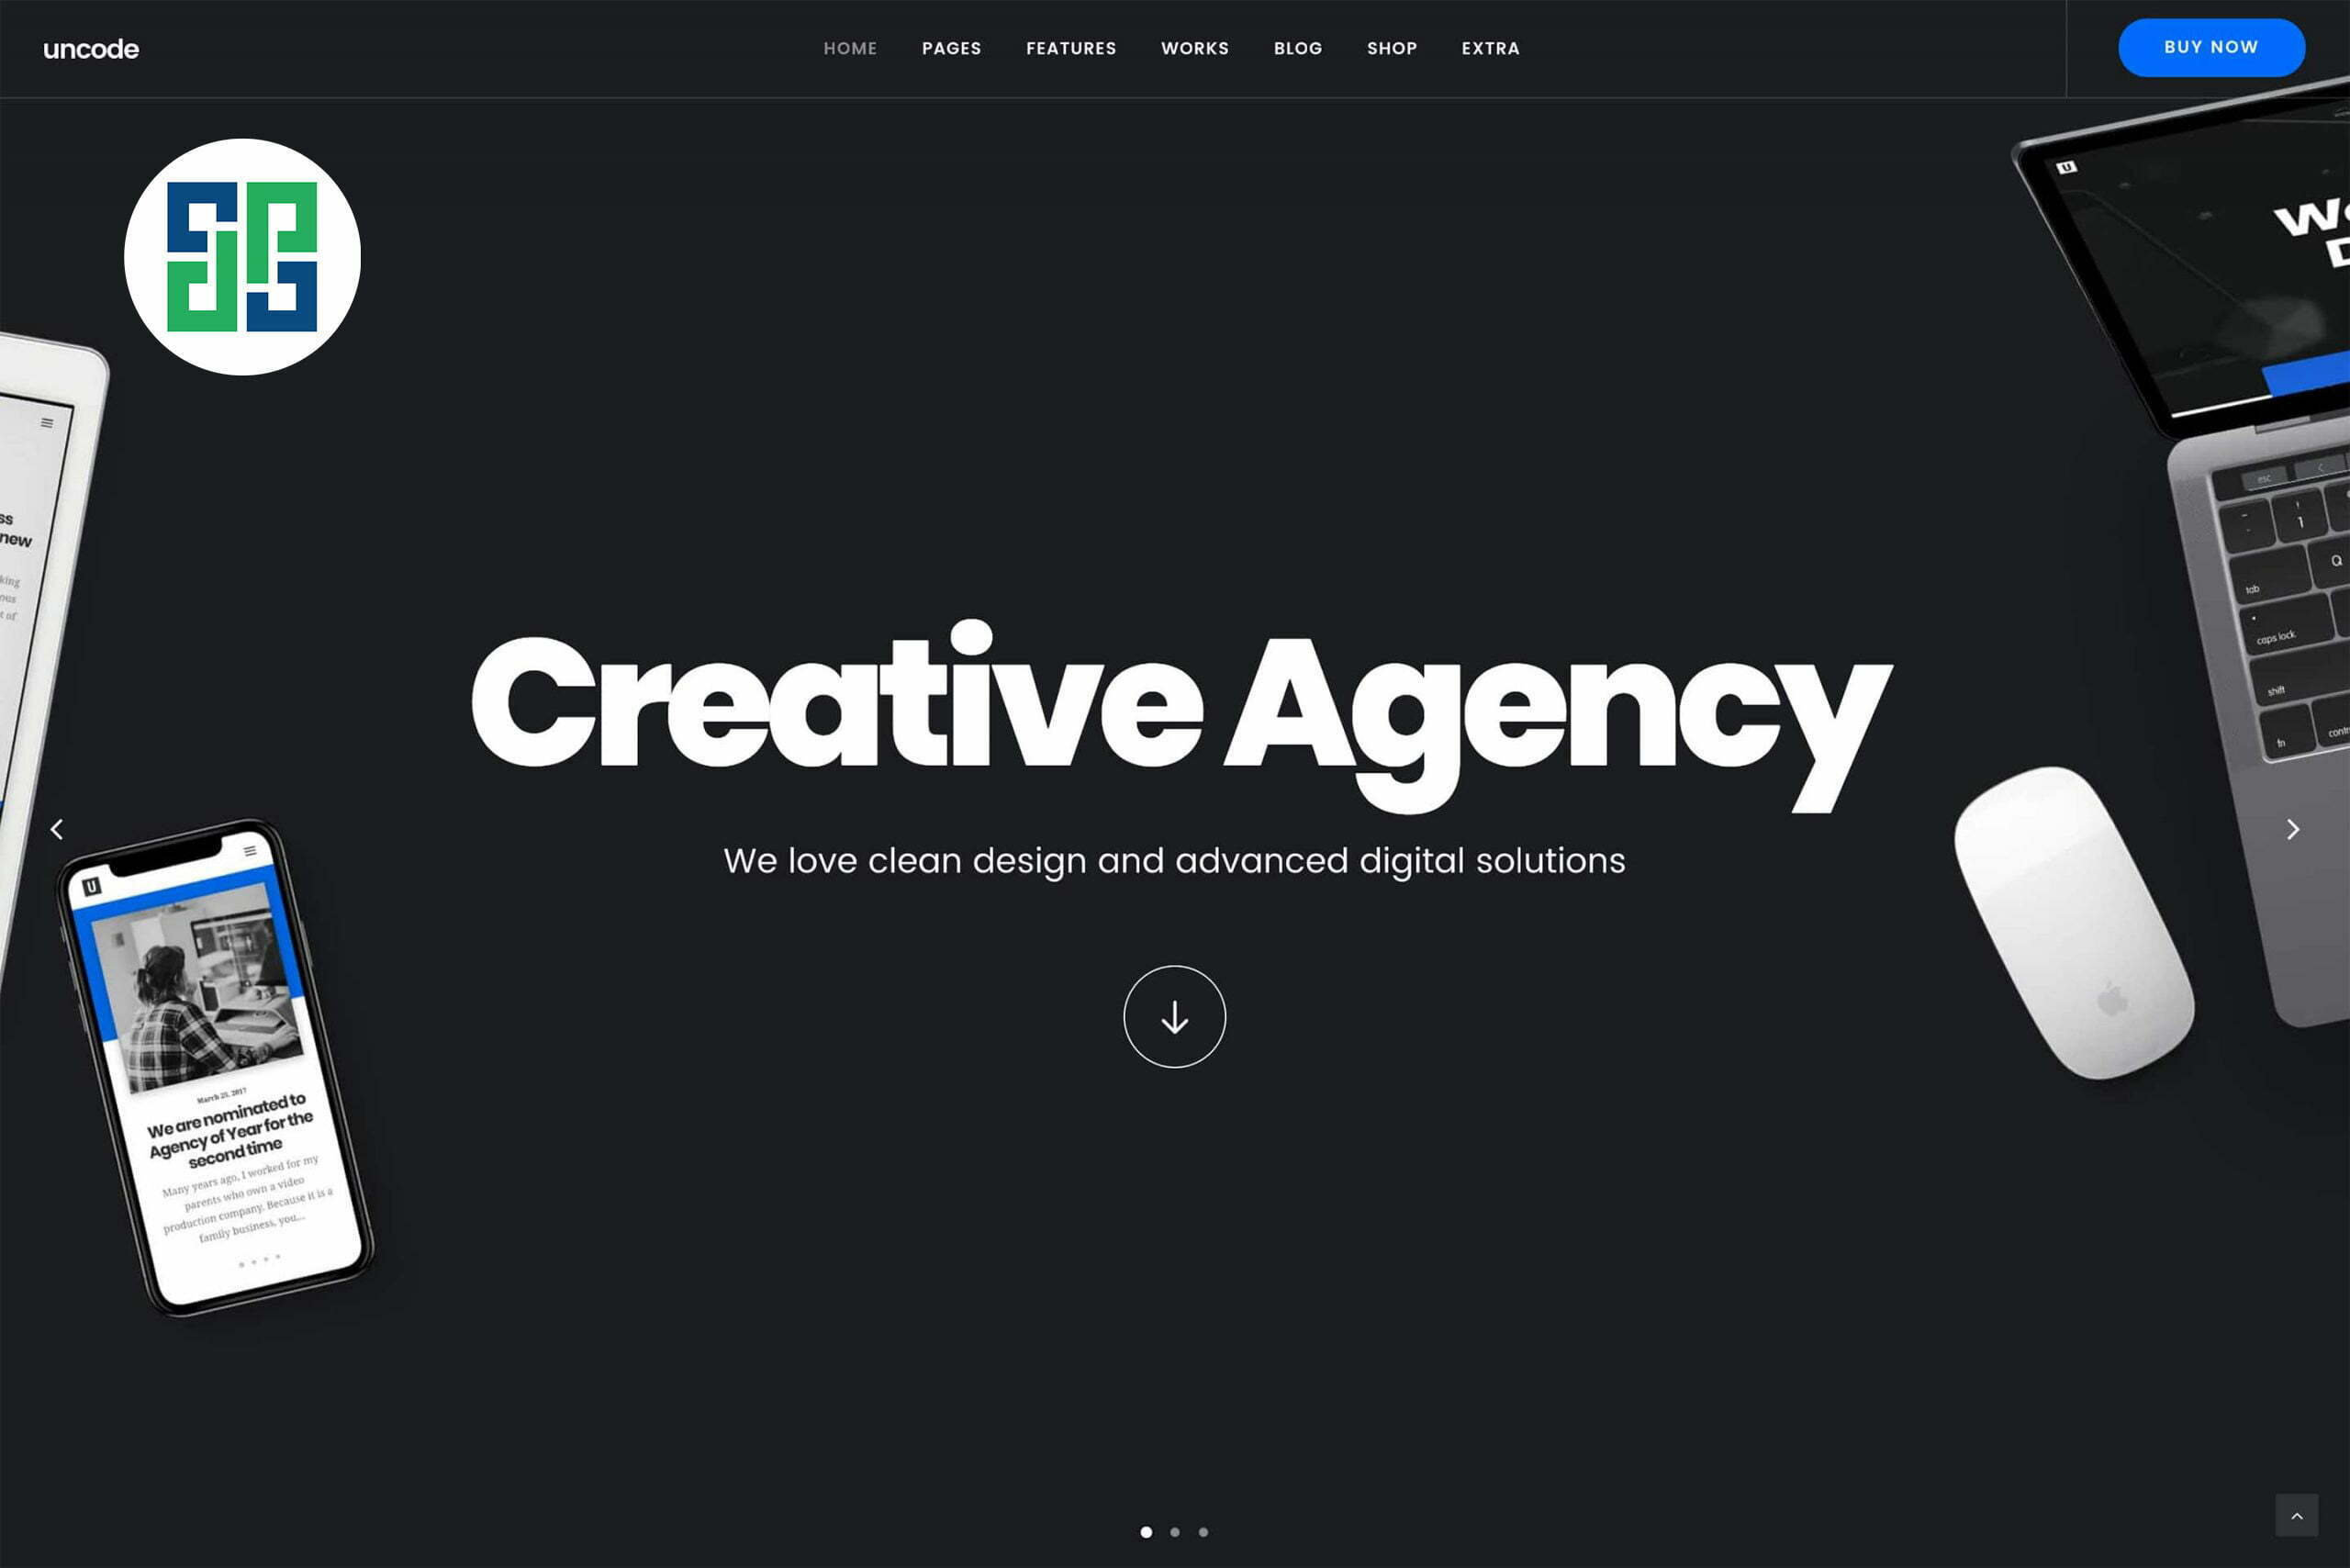 Agencia creativa